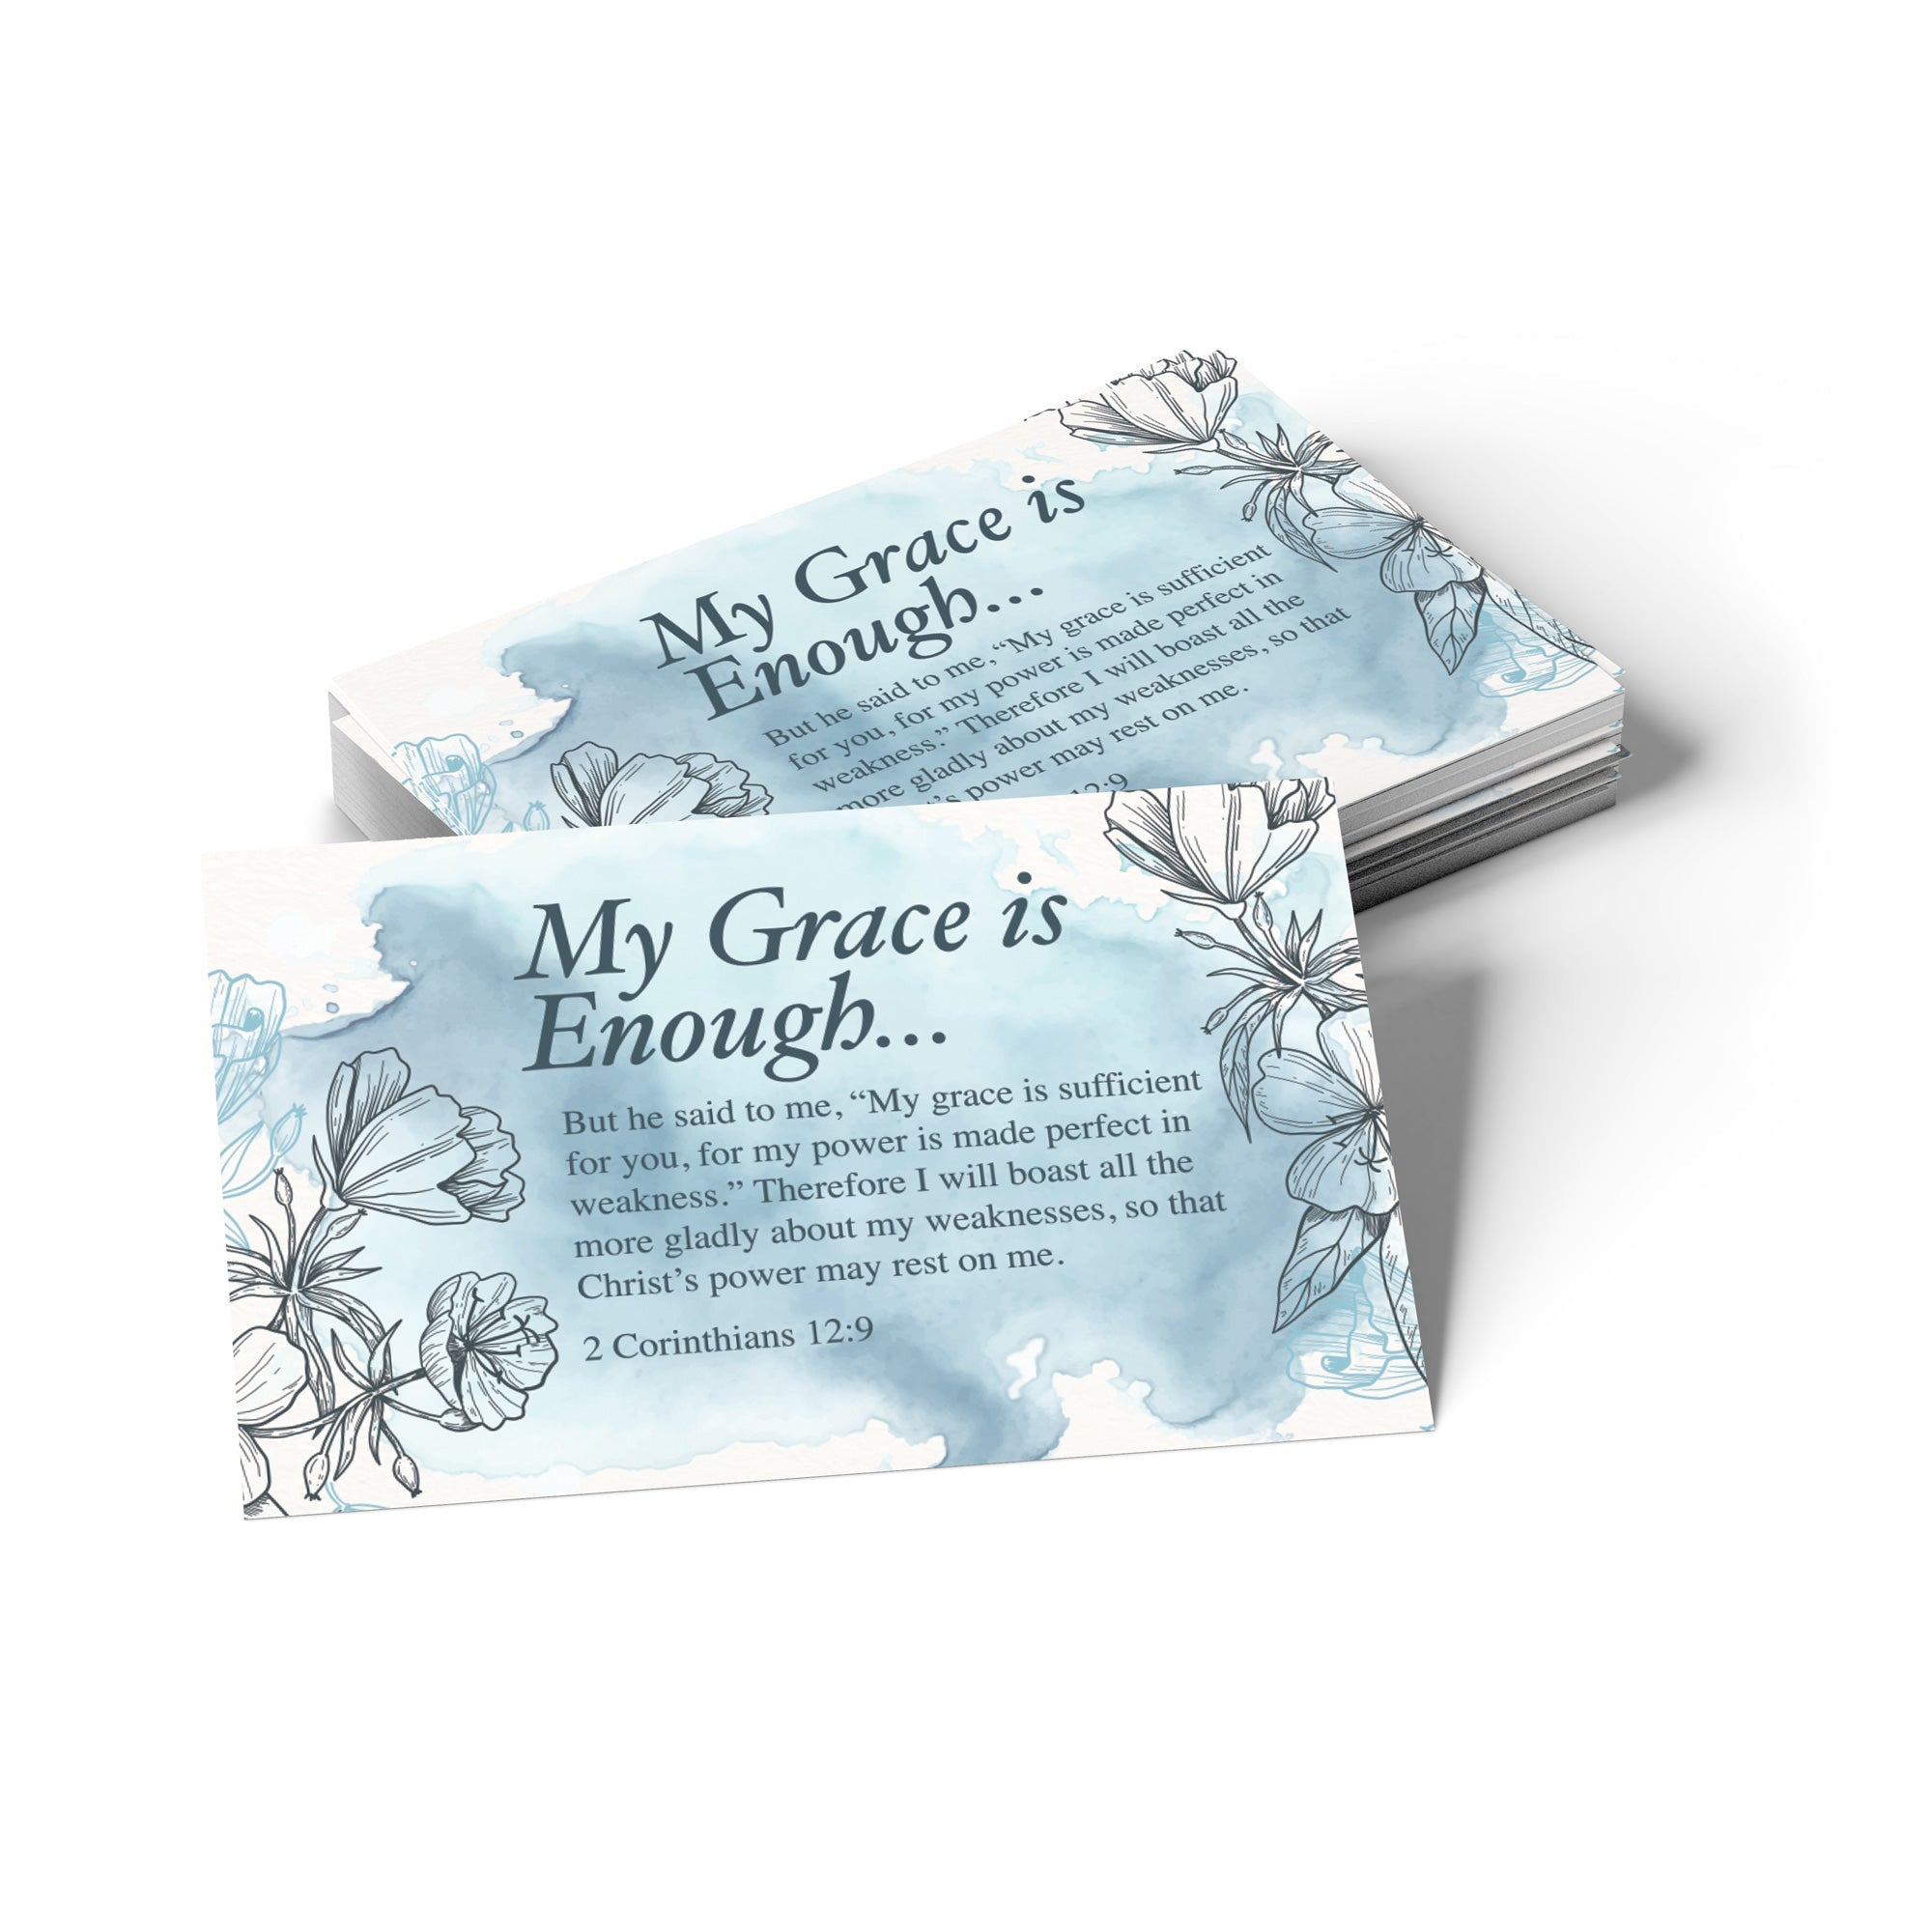 My Grace is Enough, 1 Corinthians 12:9, Pass Along Scripture Cards, Pack of 25